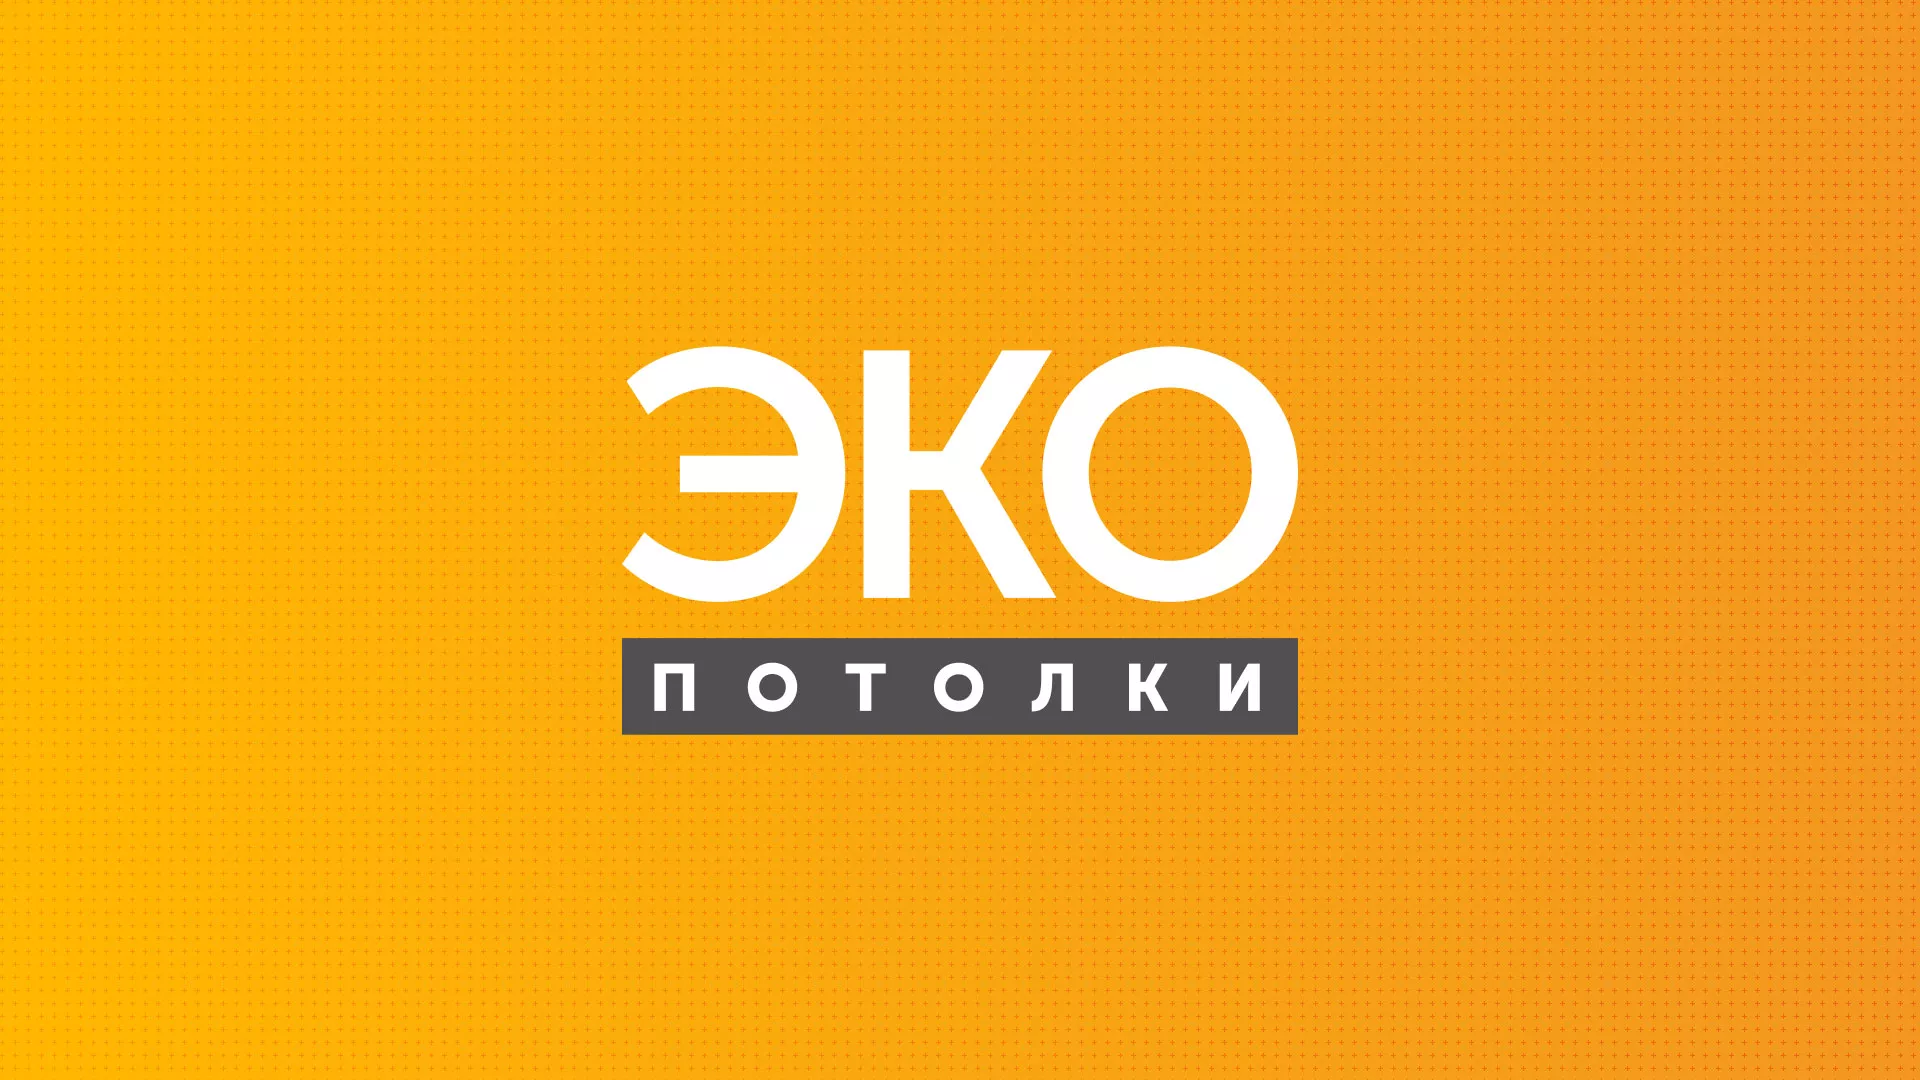 Разработка сайта по натяжным потолкам «Эко Потолки» в Южно-Сахалинске